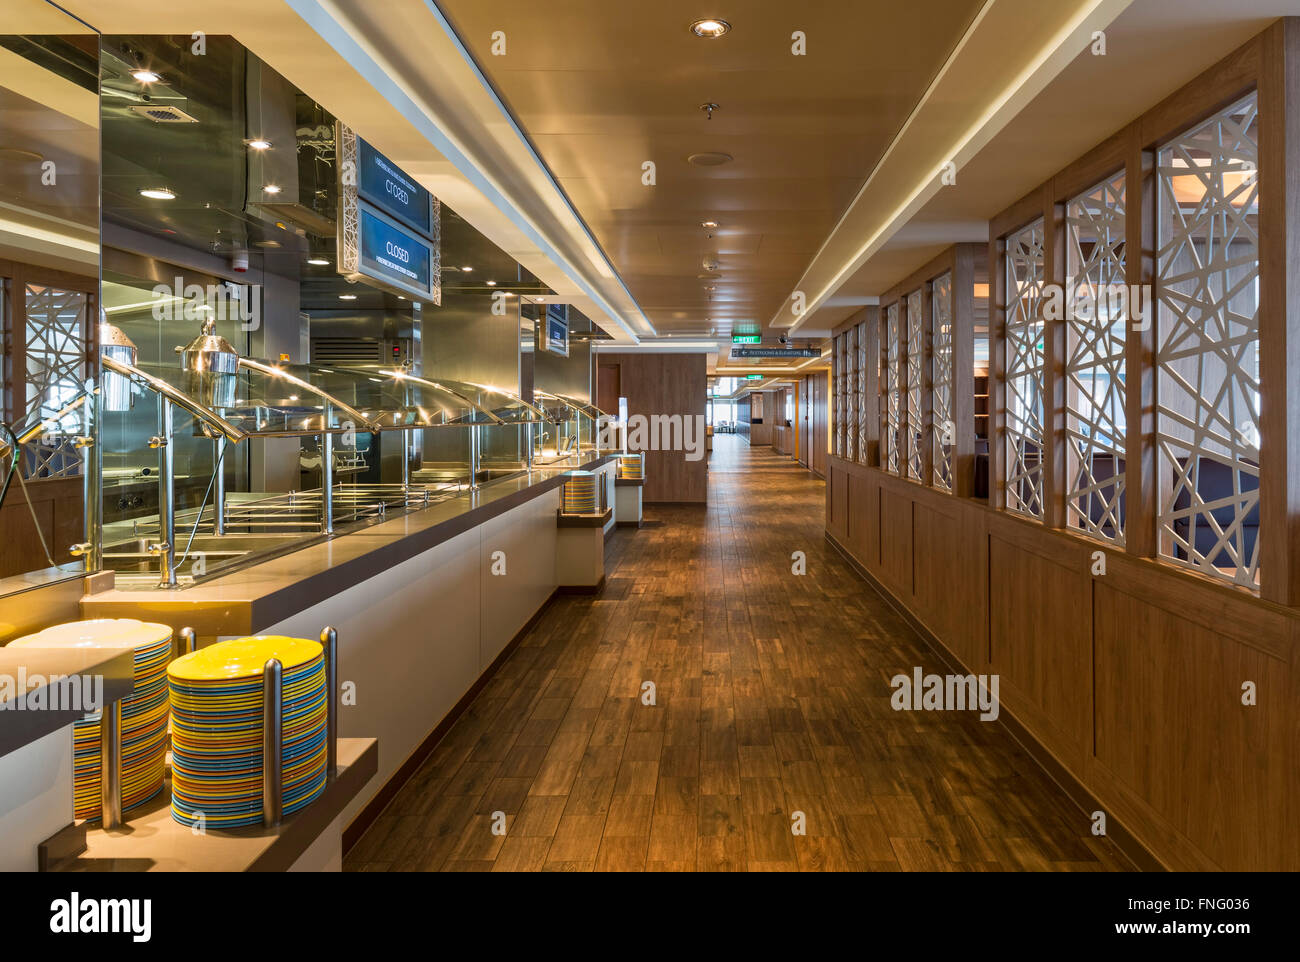 Servery for the cafeteria style restaurant. Norwegian Cruise Ship – The Escape, Southampton, United Kingdom. Architect: SMC Desi Stock Photo